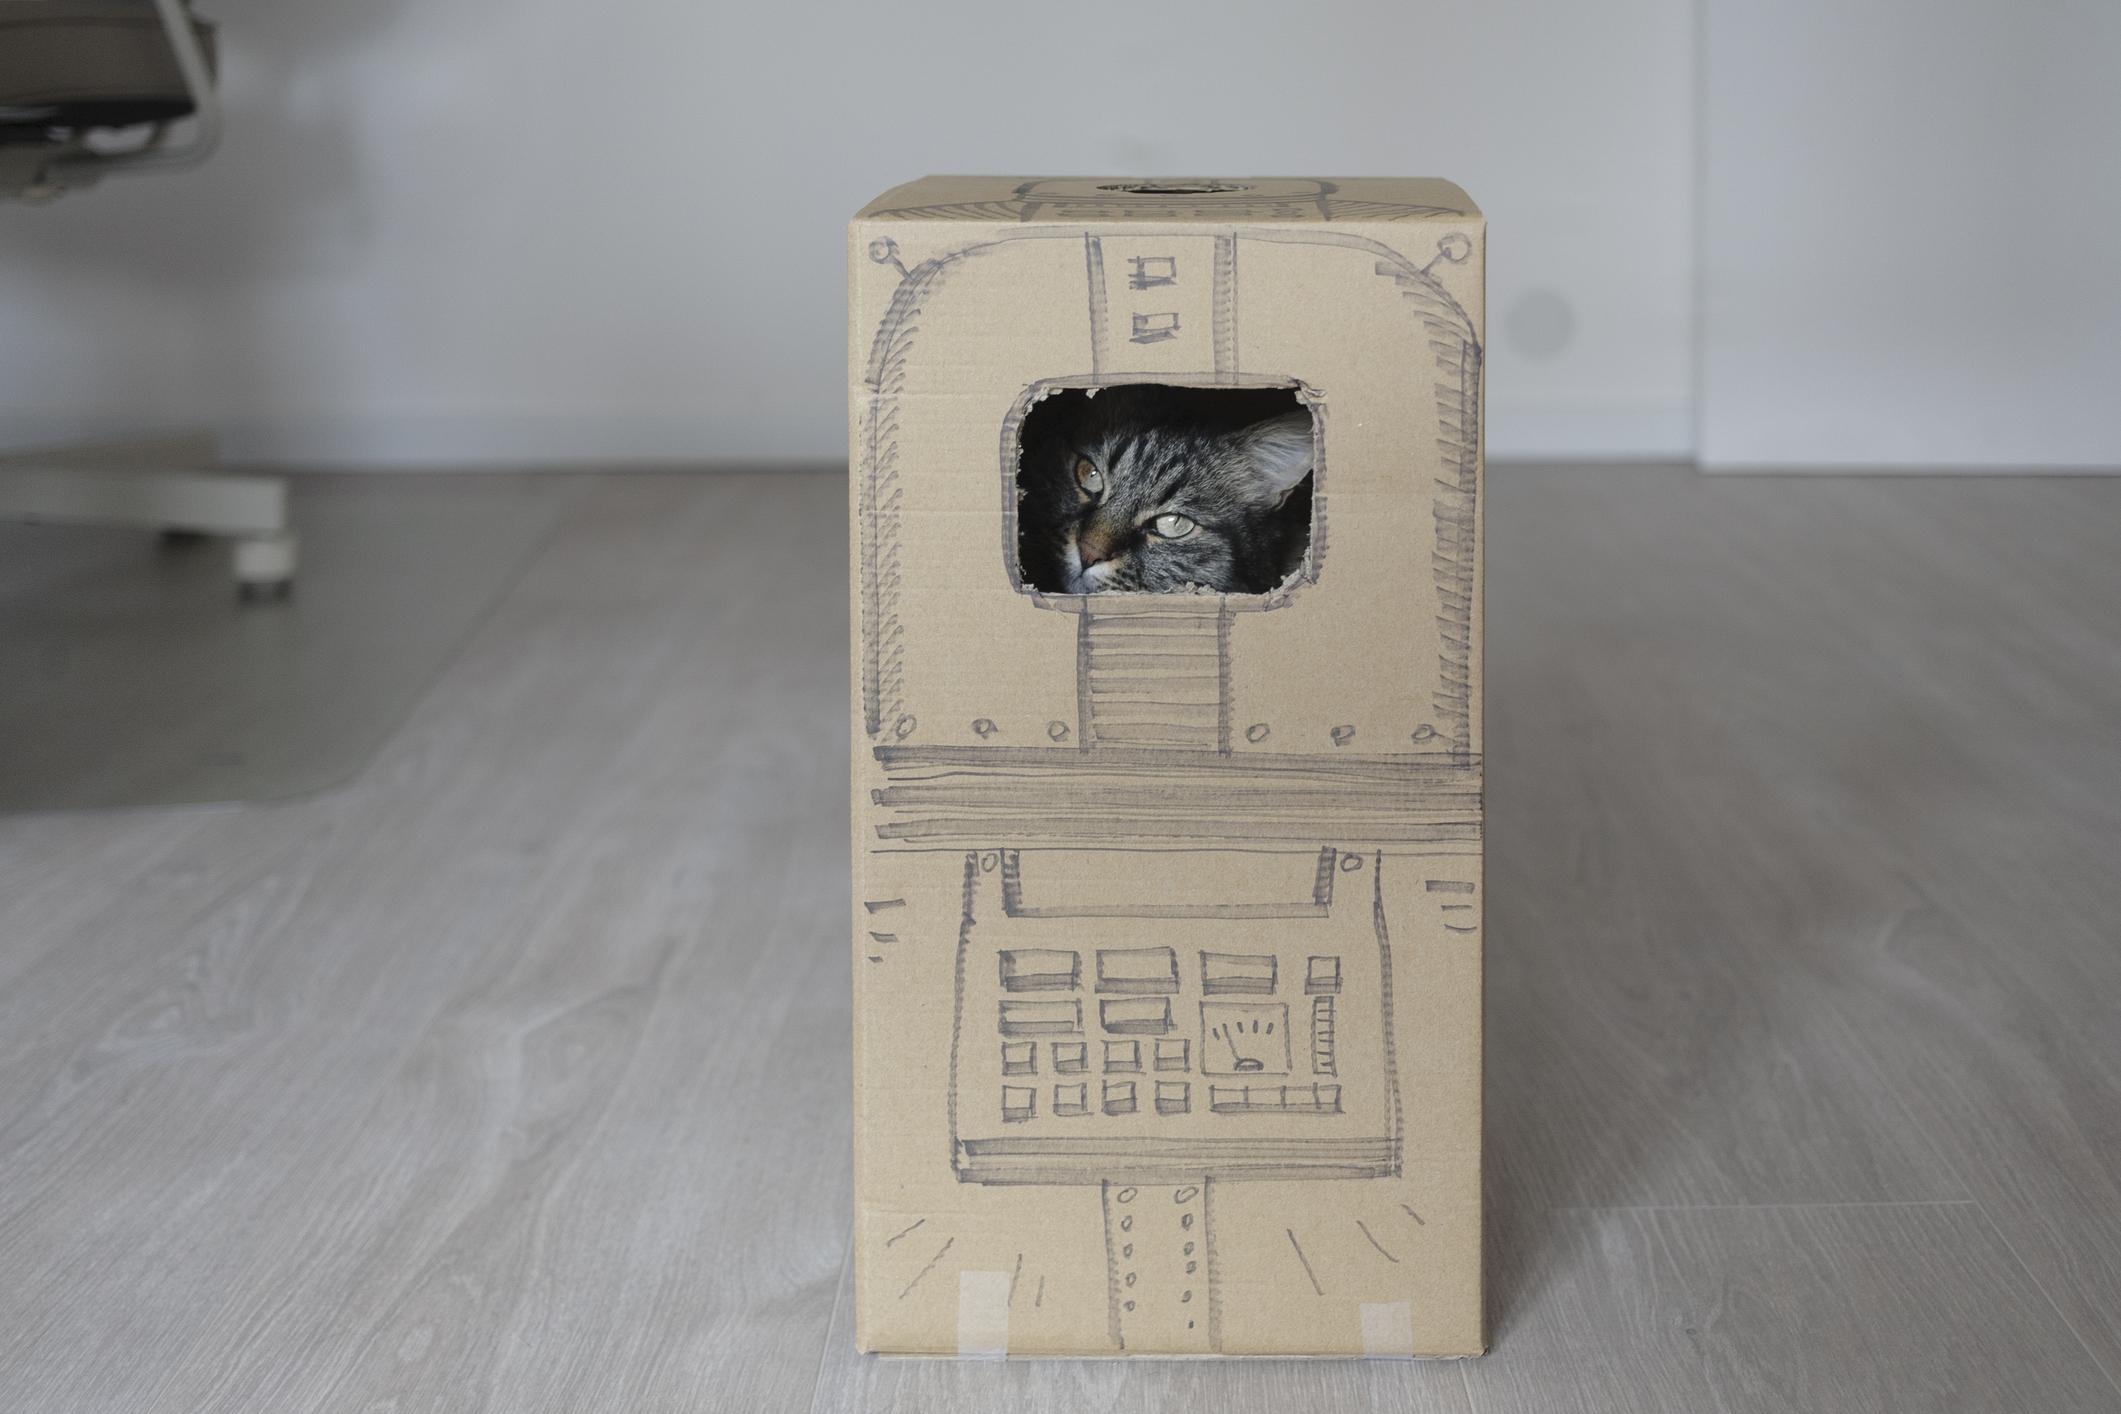 Un gato dentro de una caja